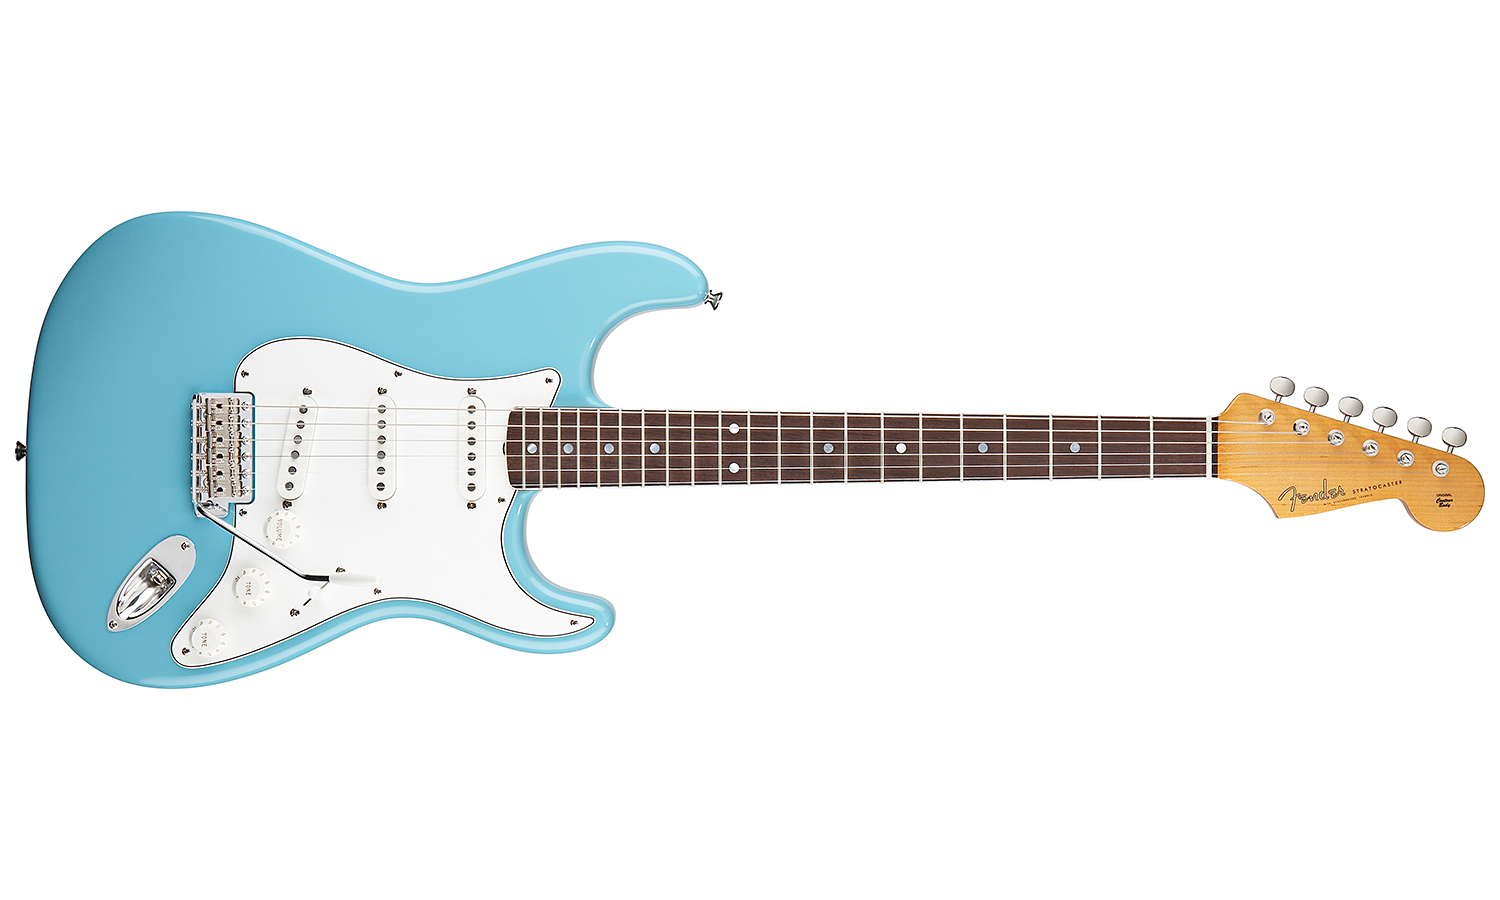 Fender Strat Eric Johnson Usa Sss Rw - Tropical Turquoise - Guitare Électrique Forme Str - Variation 1